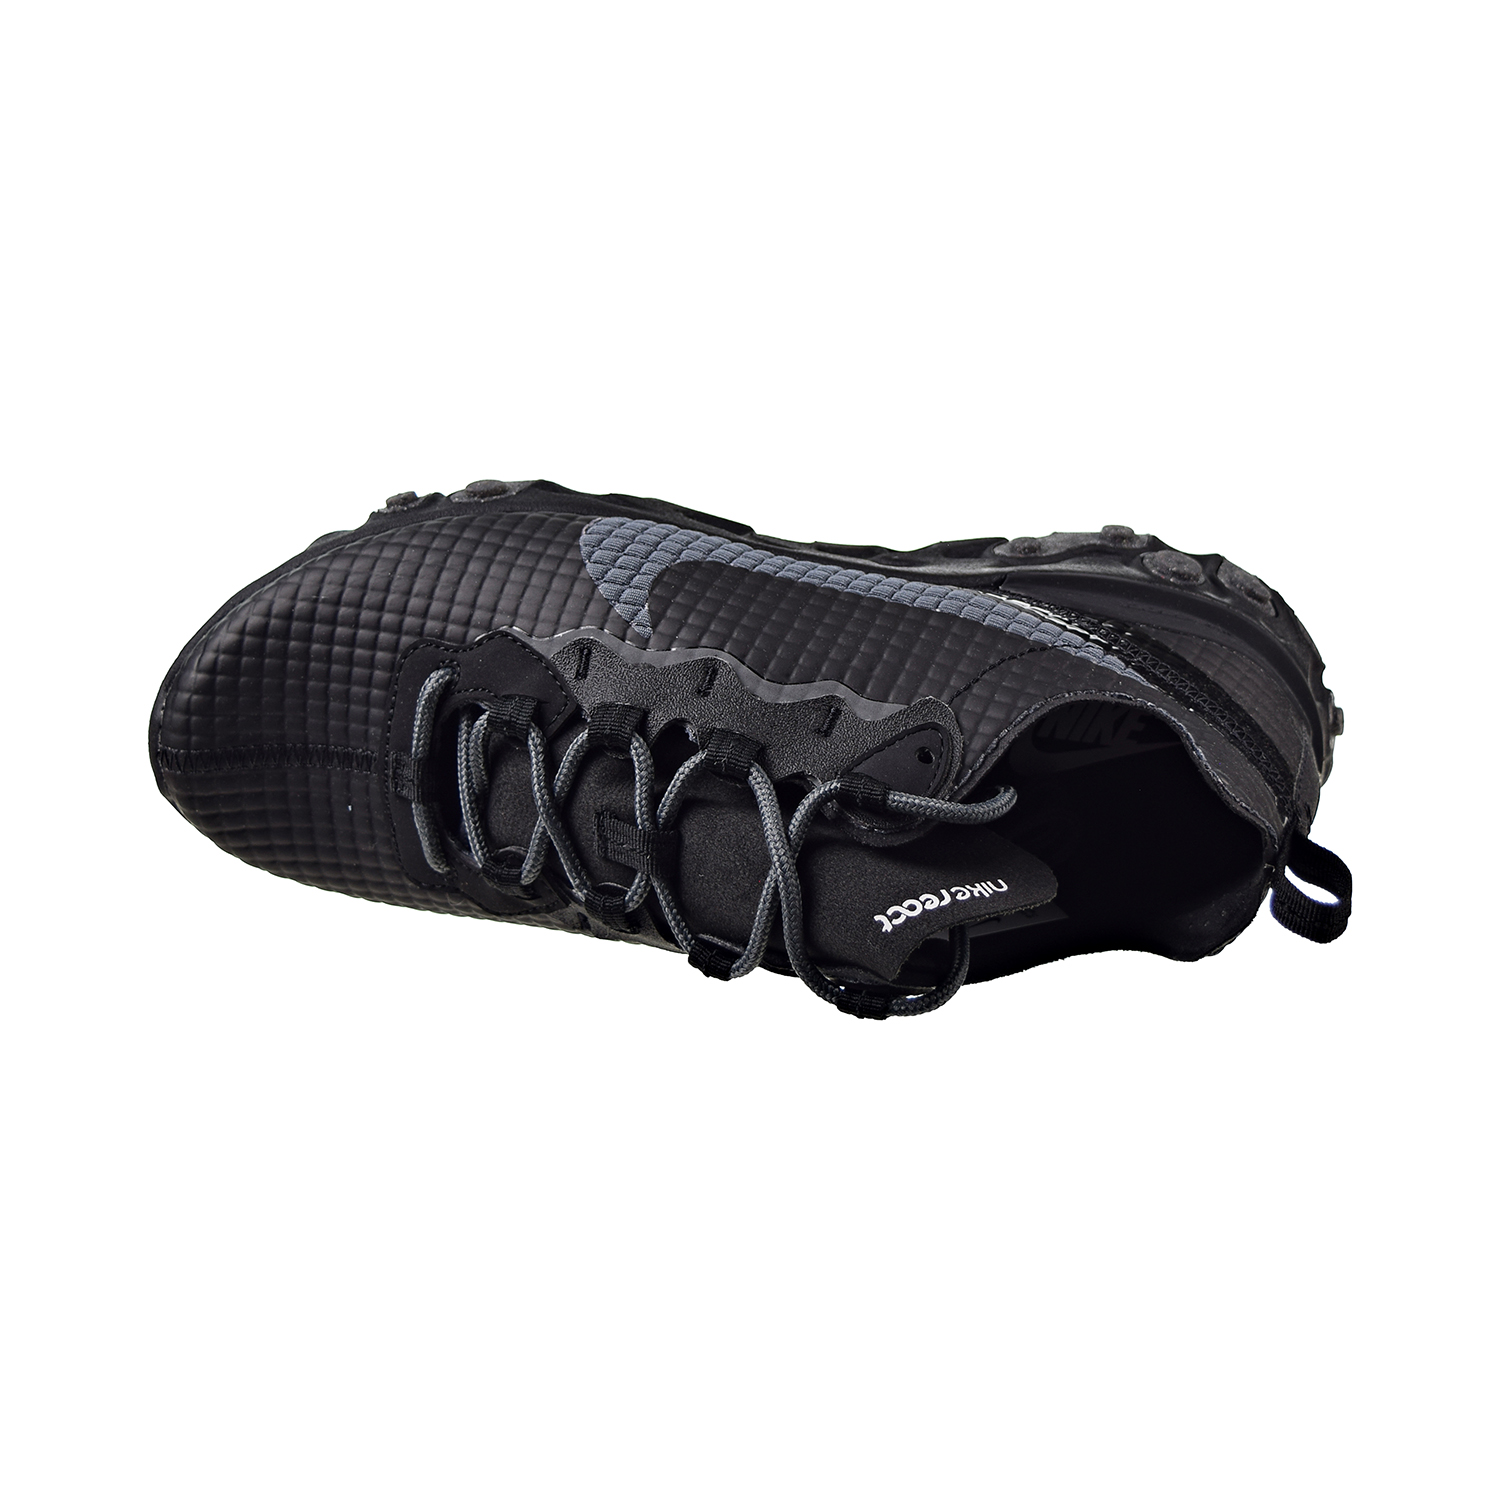 Nike React Element 55 PRM Men's Shoes Black-Dark Grey-Anthracite ci3835-002 - image 5 of 6